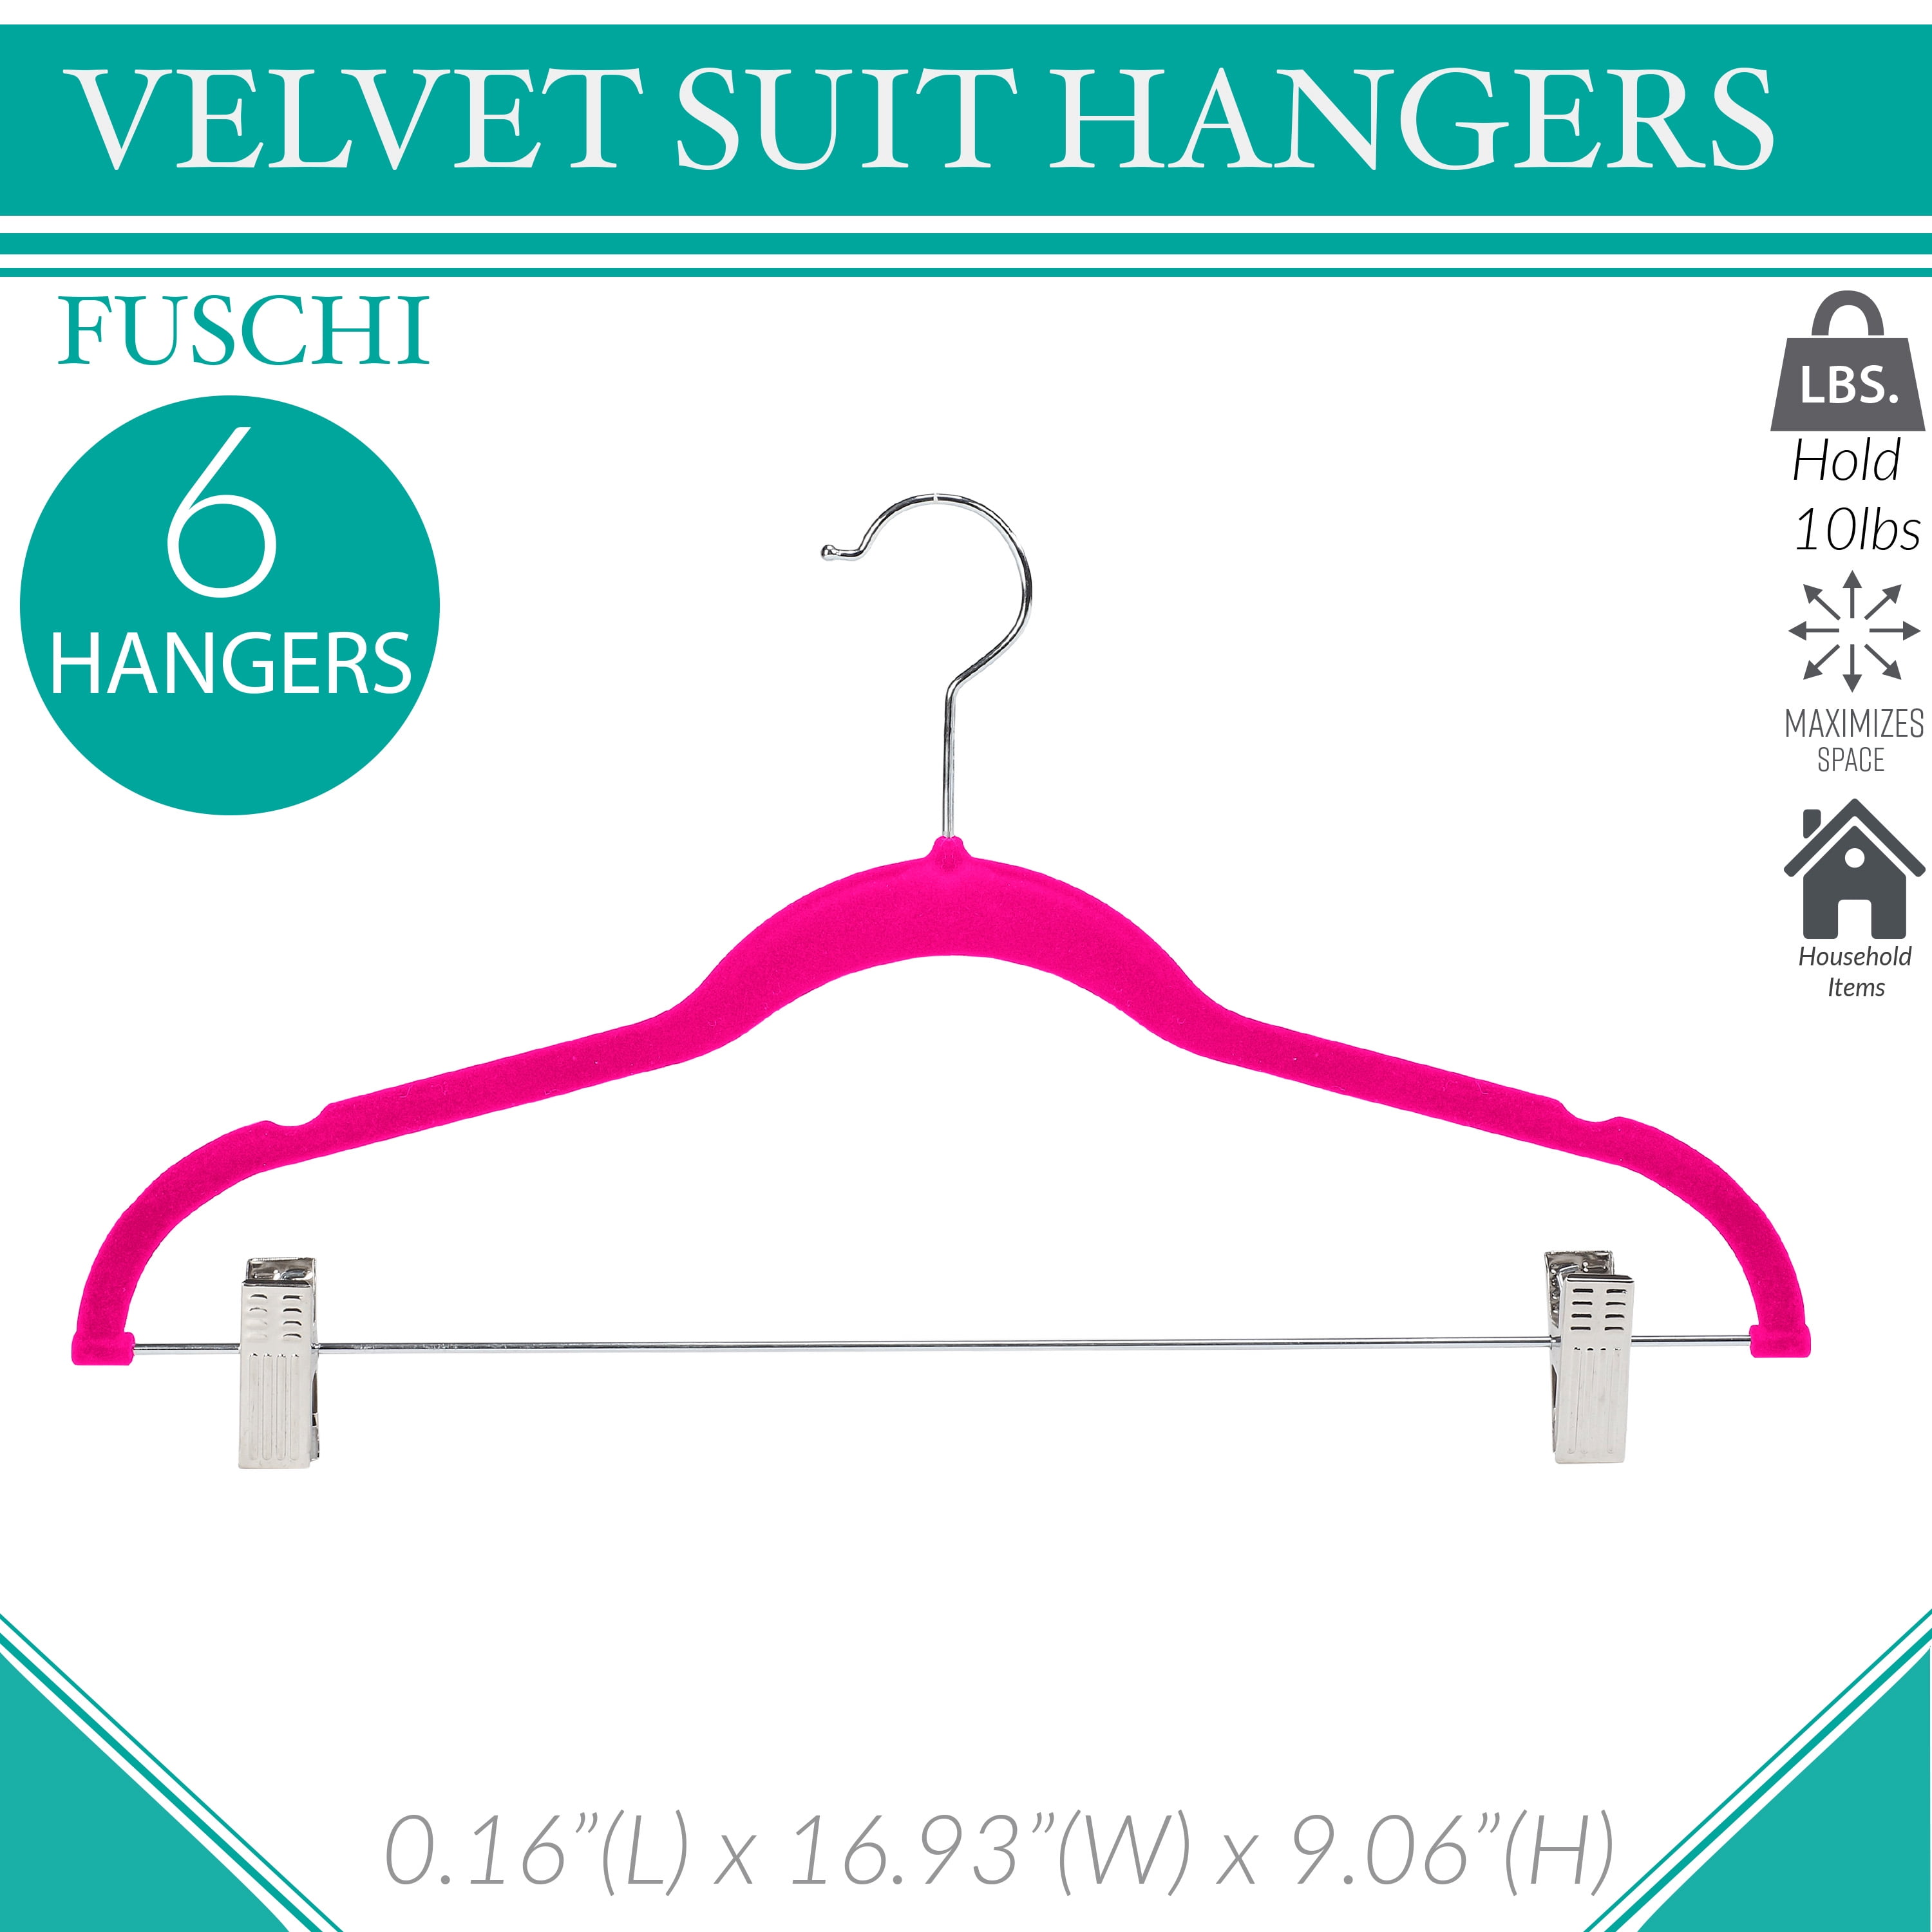 SIMPLIFY Gray Velvet Pants Hangers 6-Pack 3227-GREY - The Home Depot